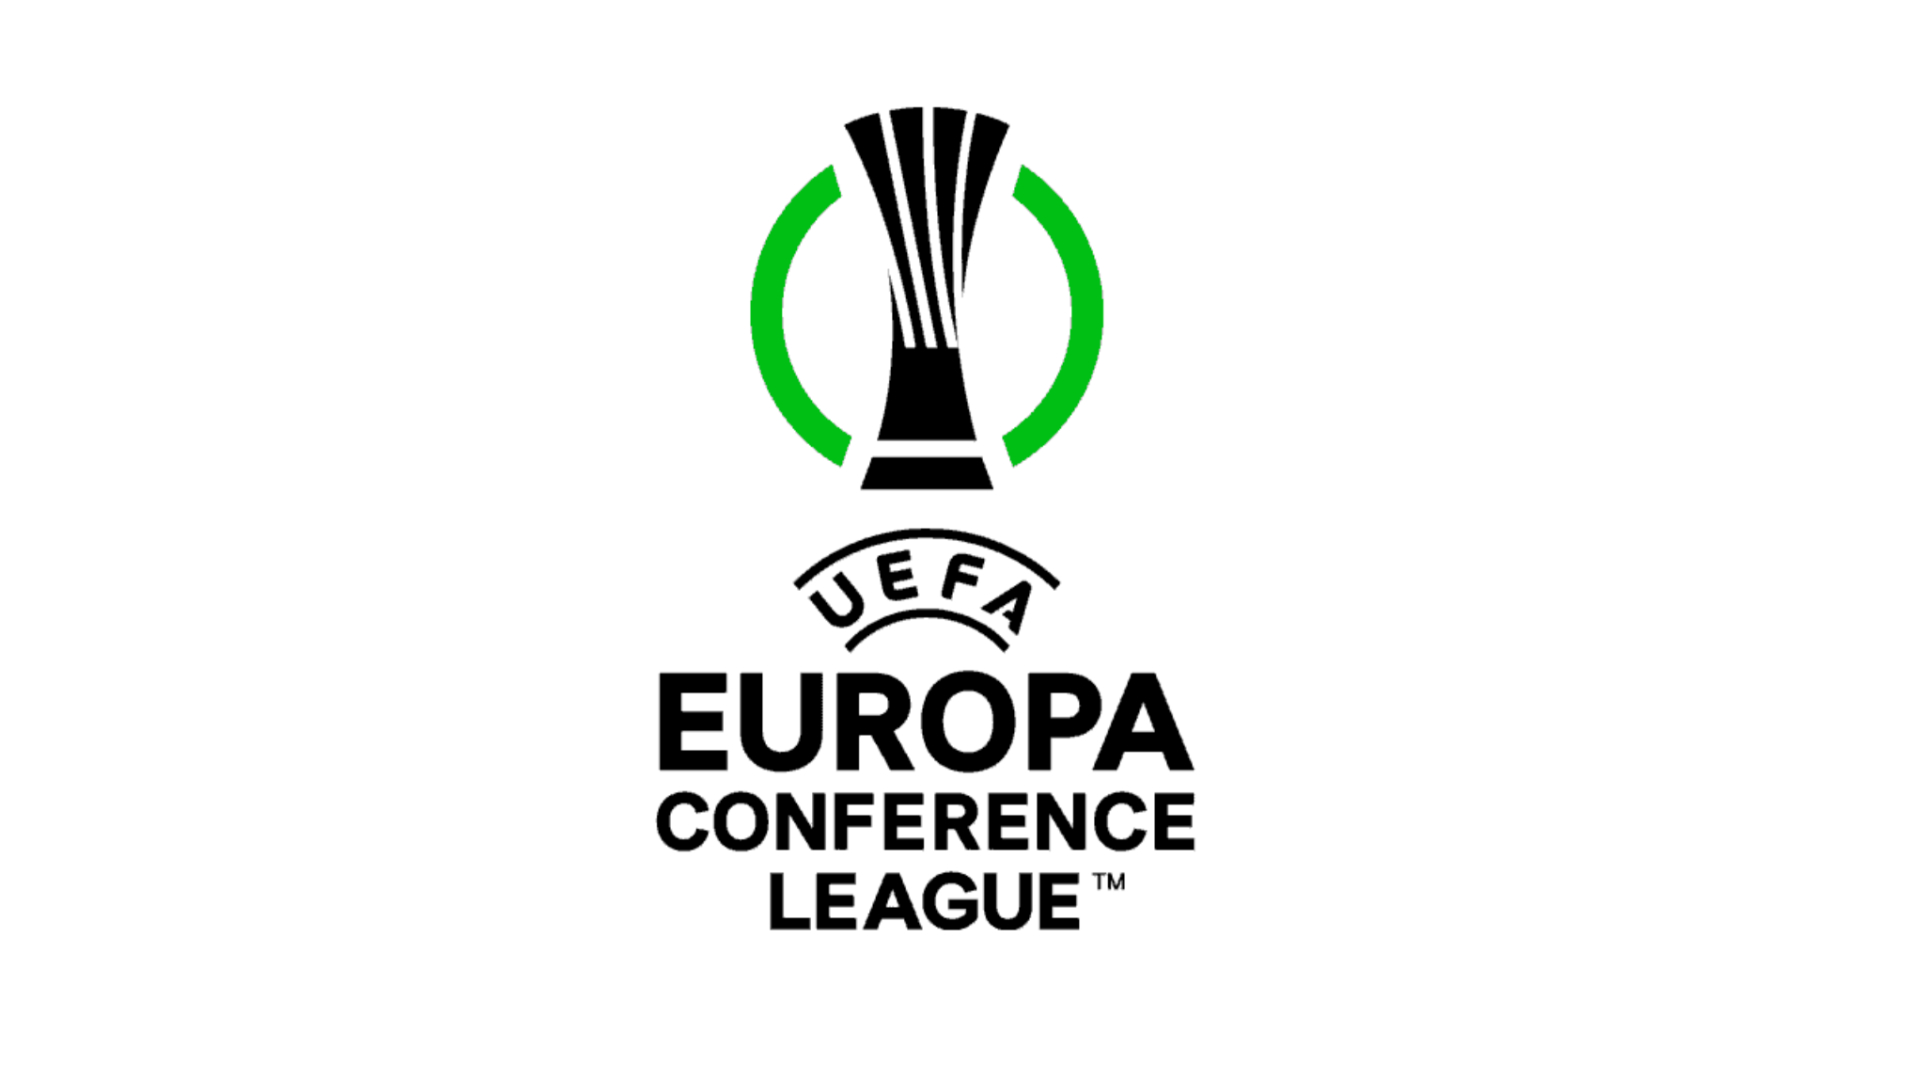 Liga konferecija logo Foto UEFA Conference League.jpg